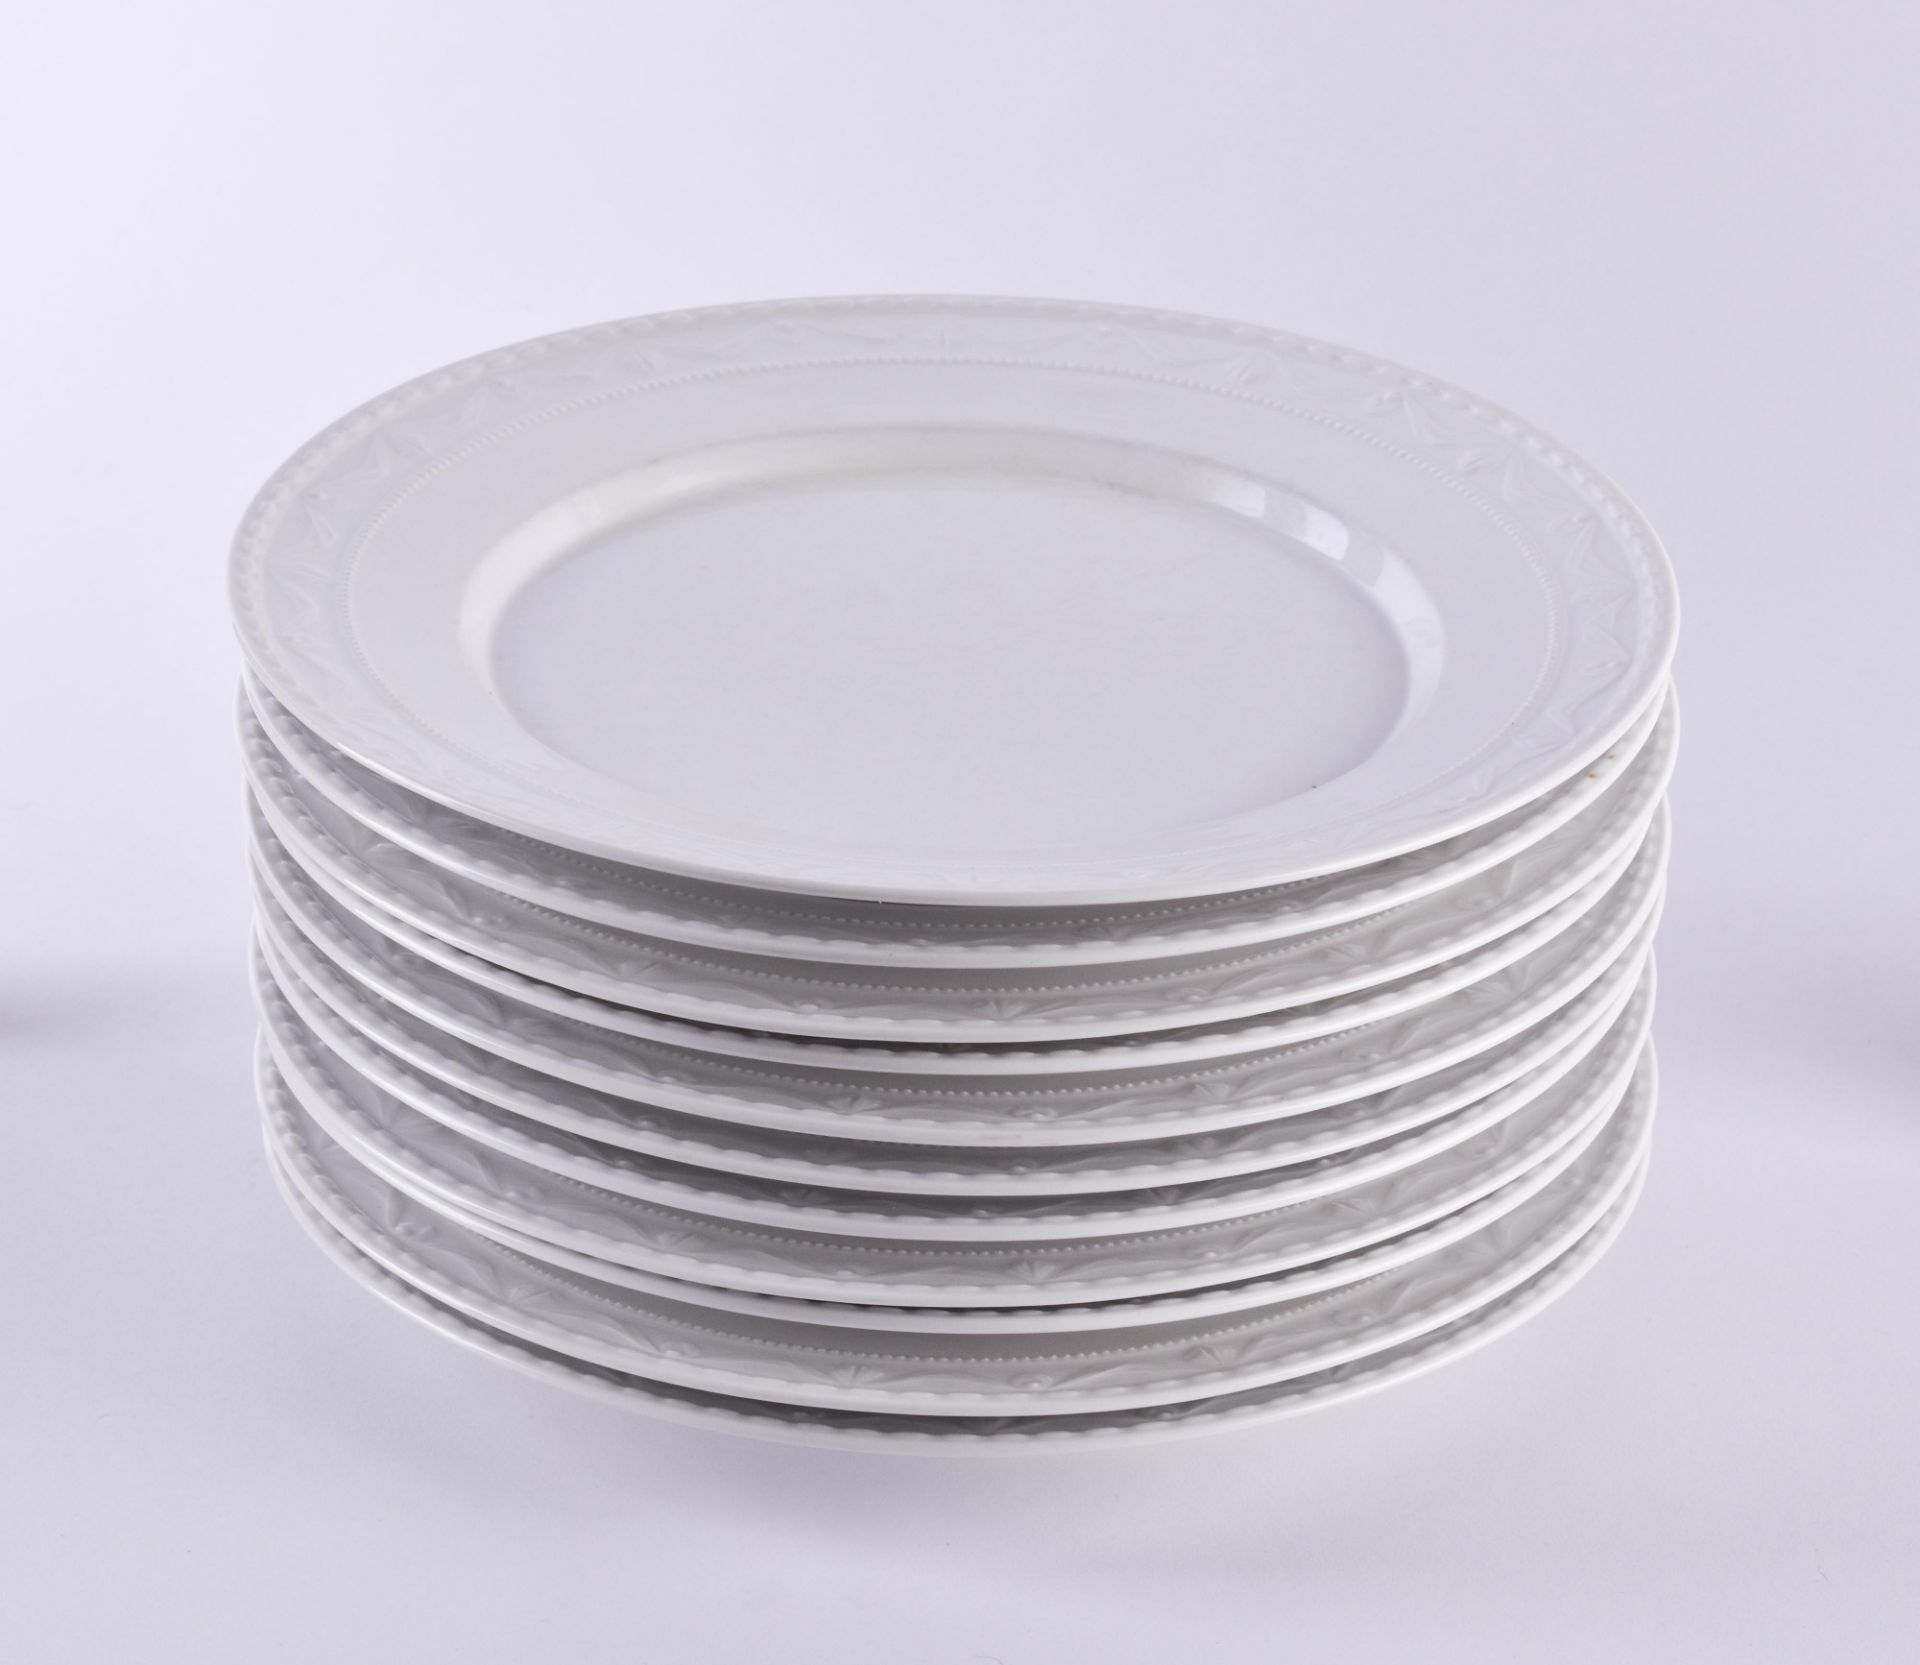 11 dinner plates KPM Kurland